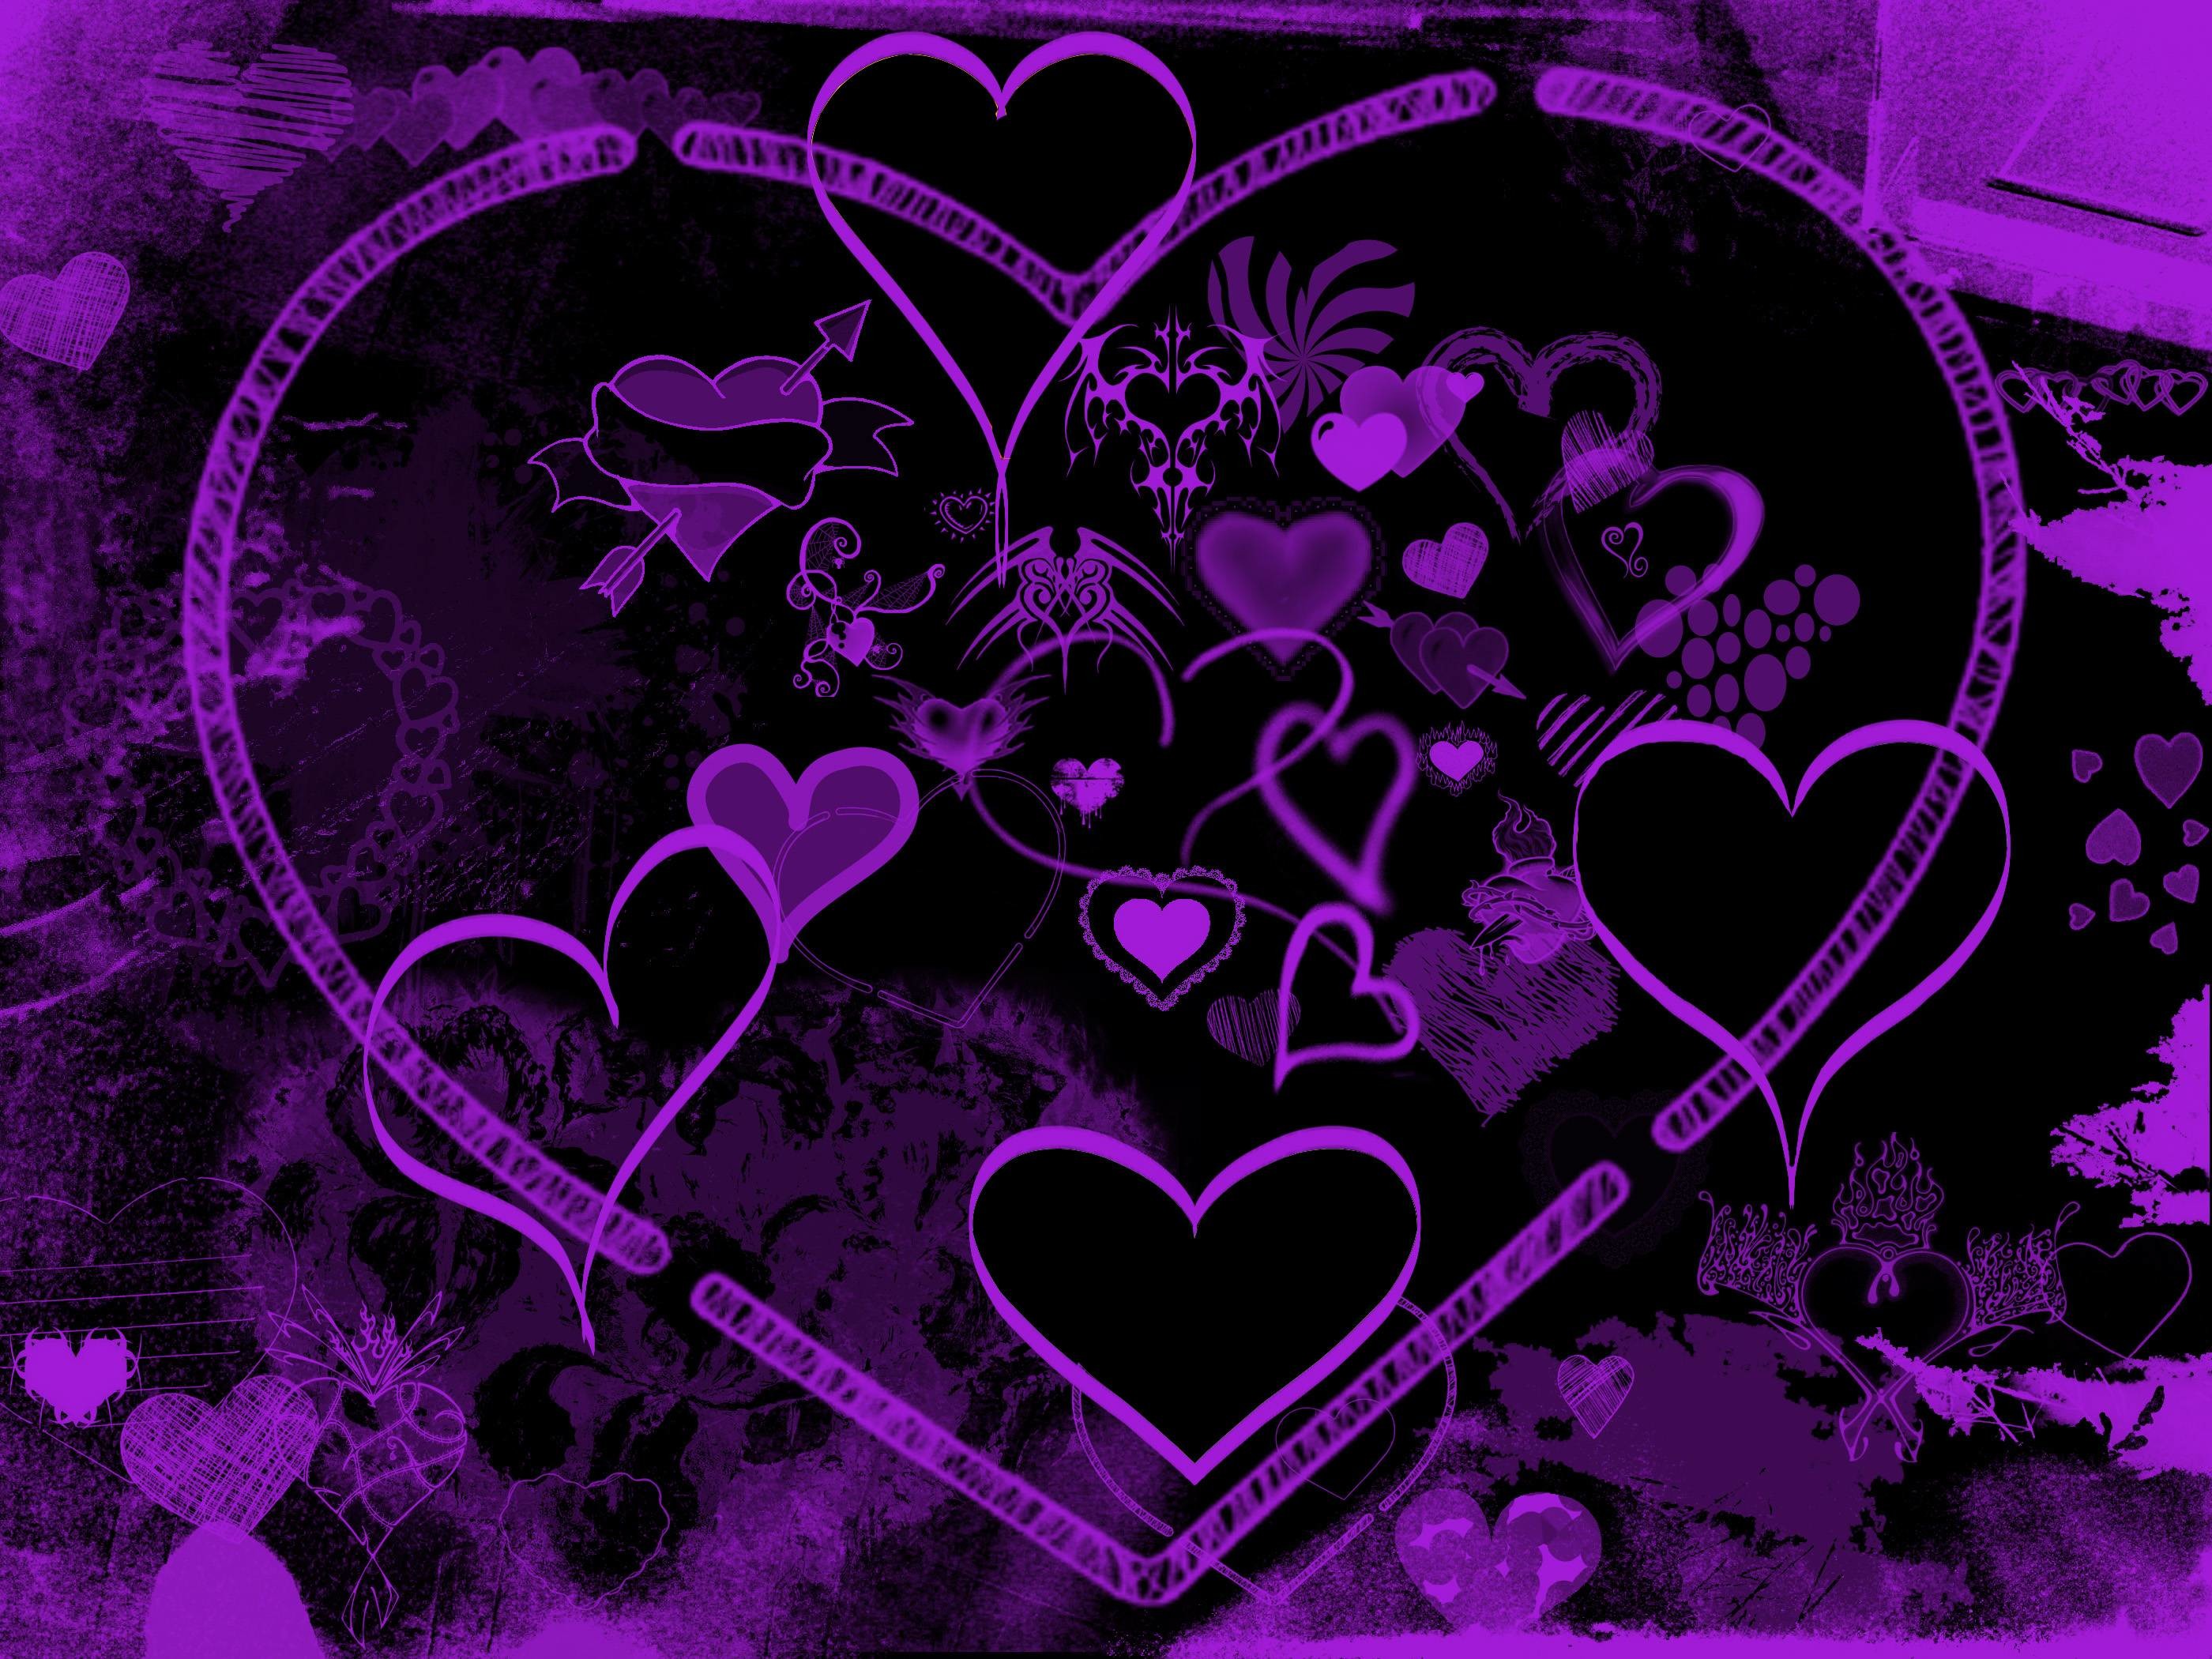 dark neon purple heart  widgetopia homescreen widgets for iPhone  iPad   Android